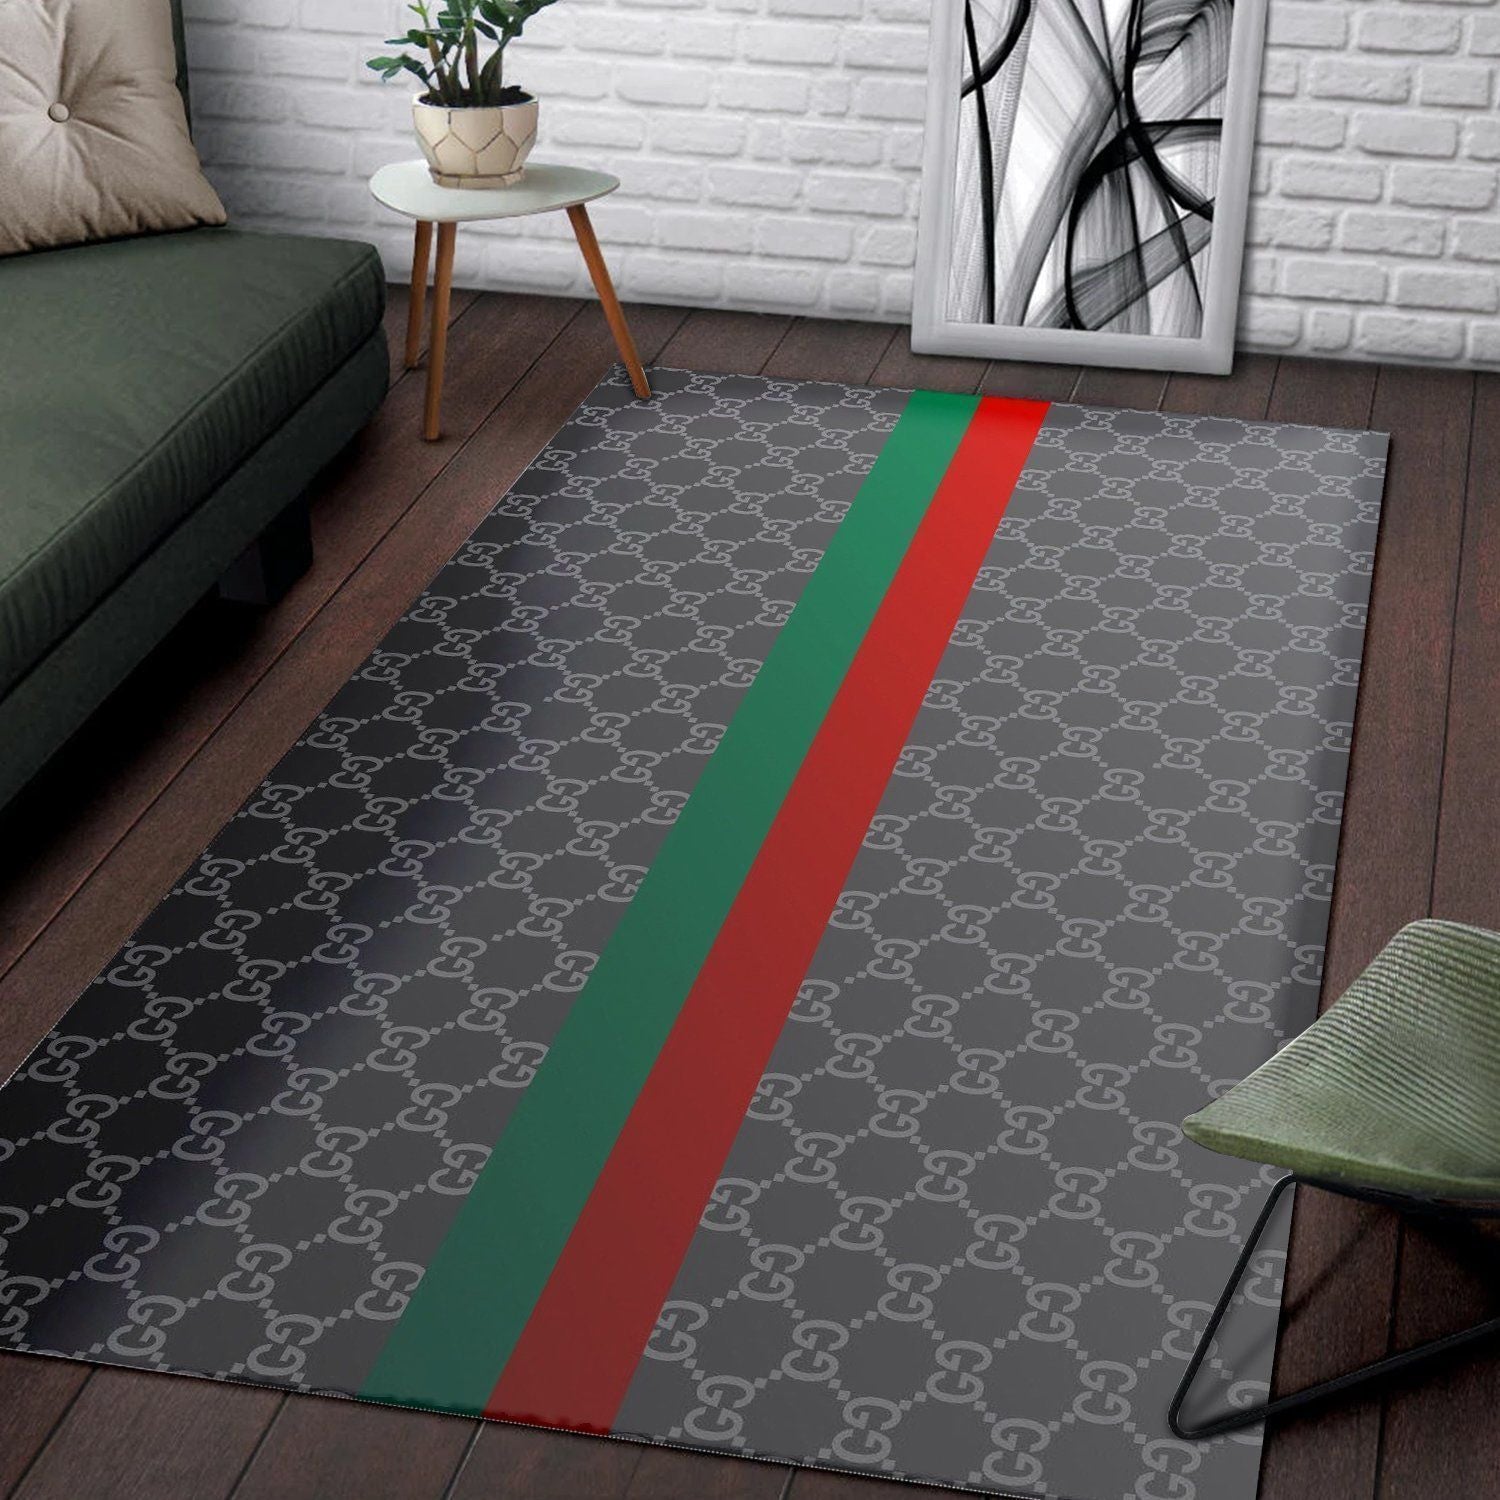 Best Price] Supreme Area Rug Red Hypebeast Carpet Luxurious Fashion Brand  Logo Living Room Rugs Floor Decor